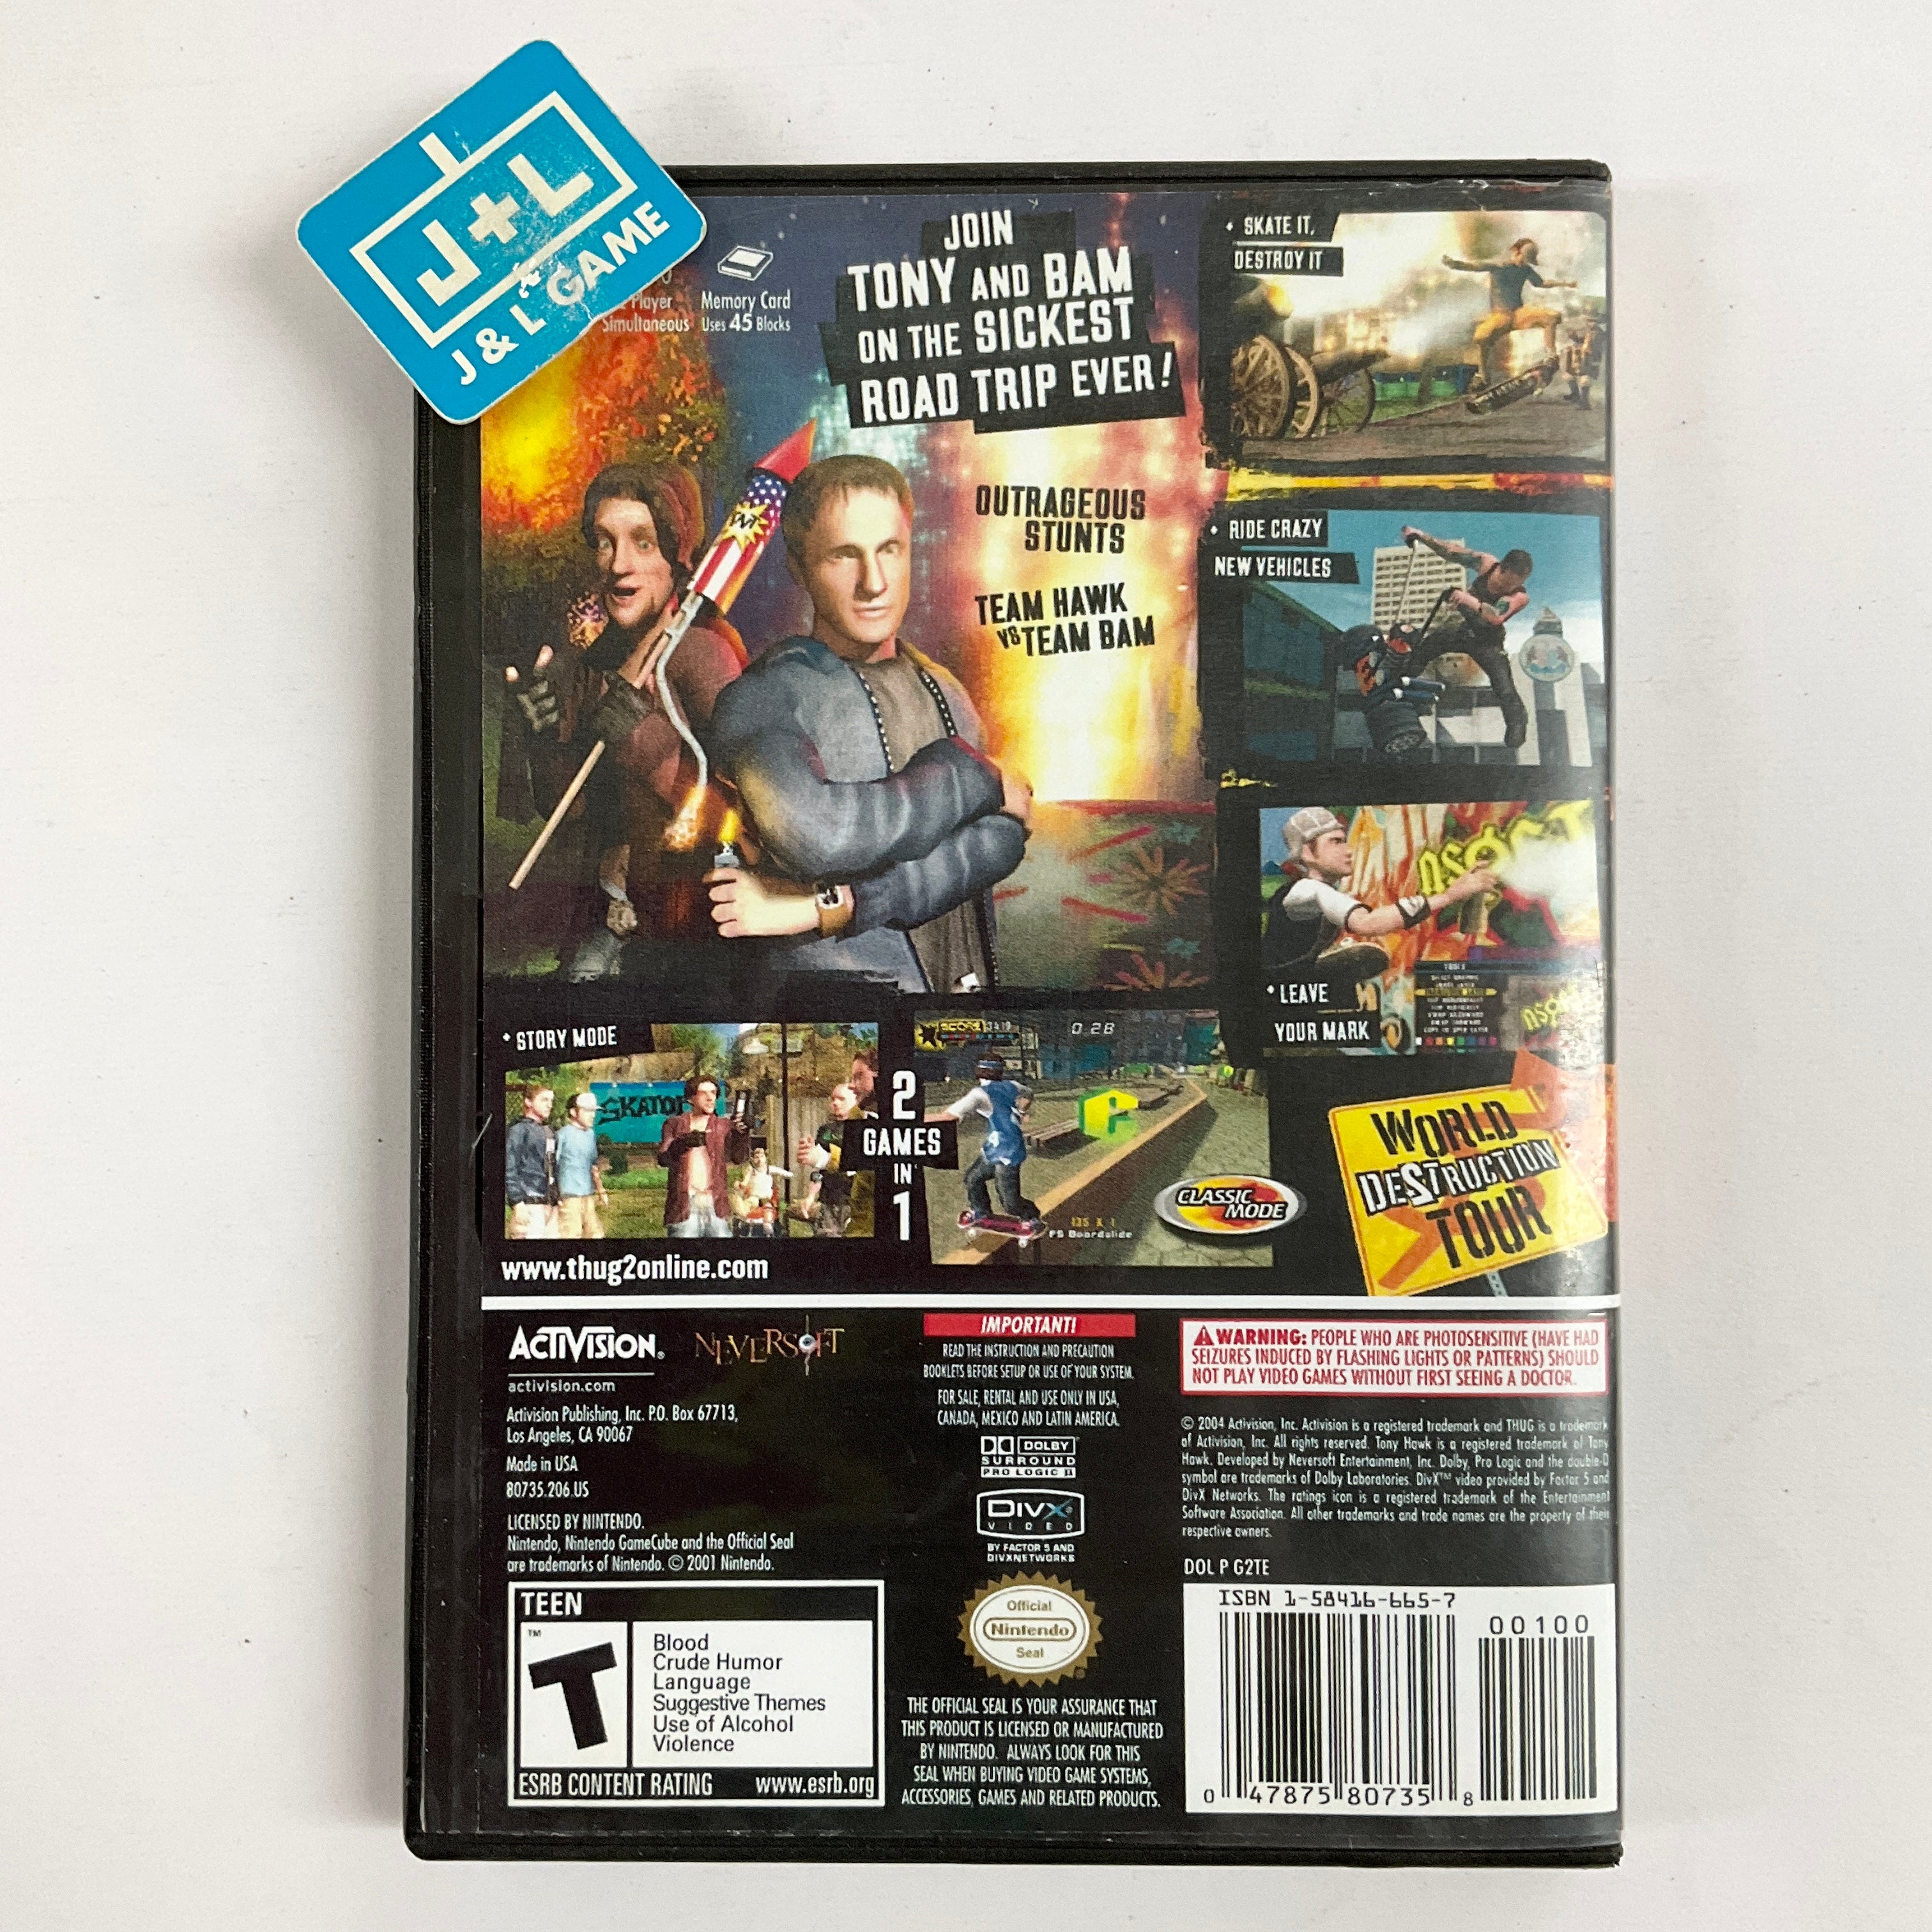 Tony Hawk's Underground 2 - (GC) Nintendo GameCube [Pre-Owned] Video Games Activision   